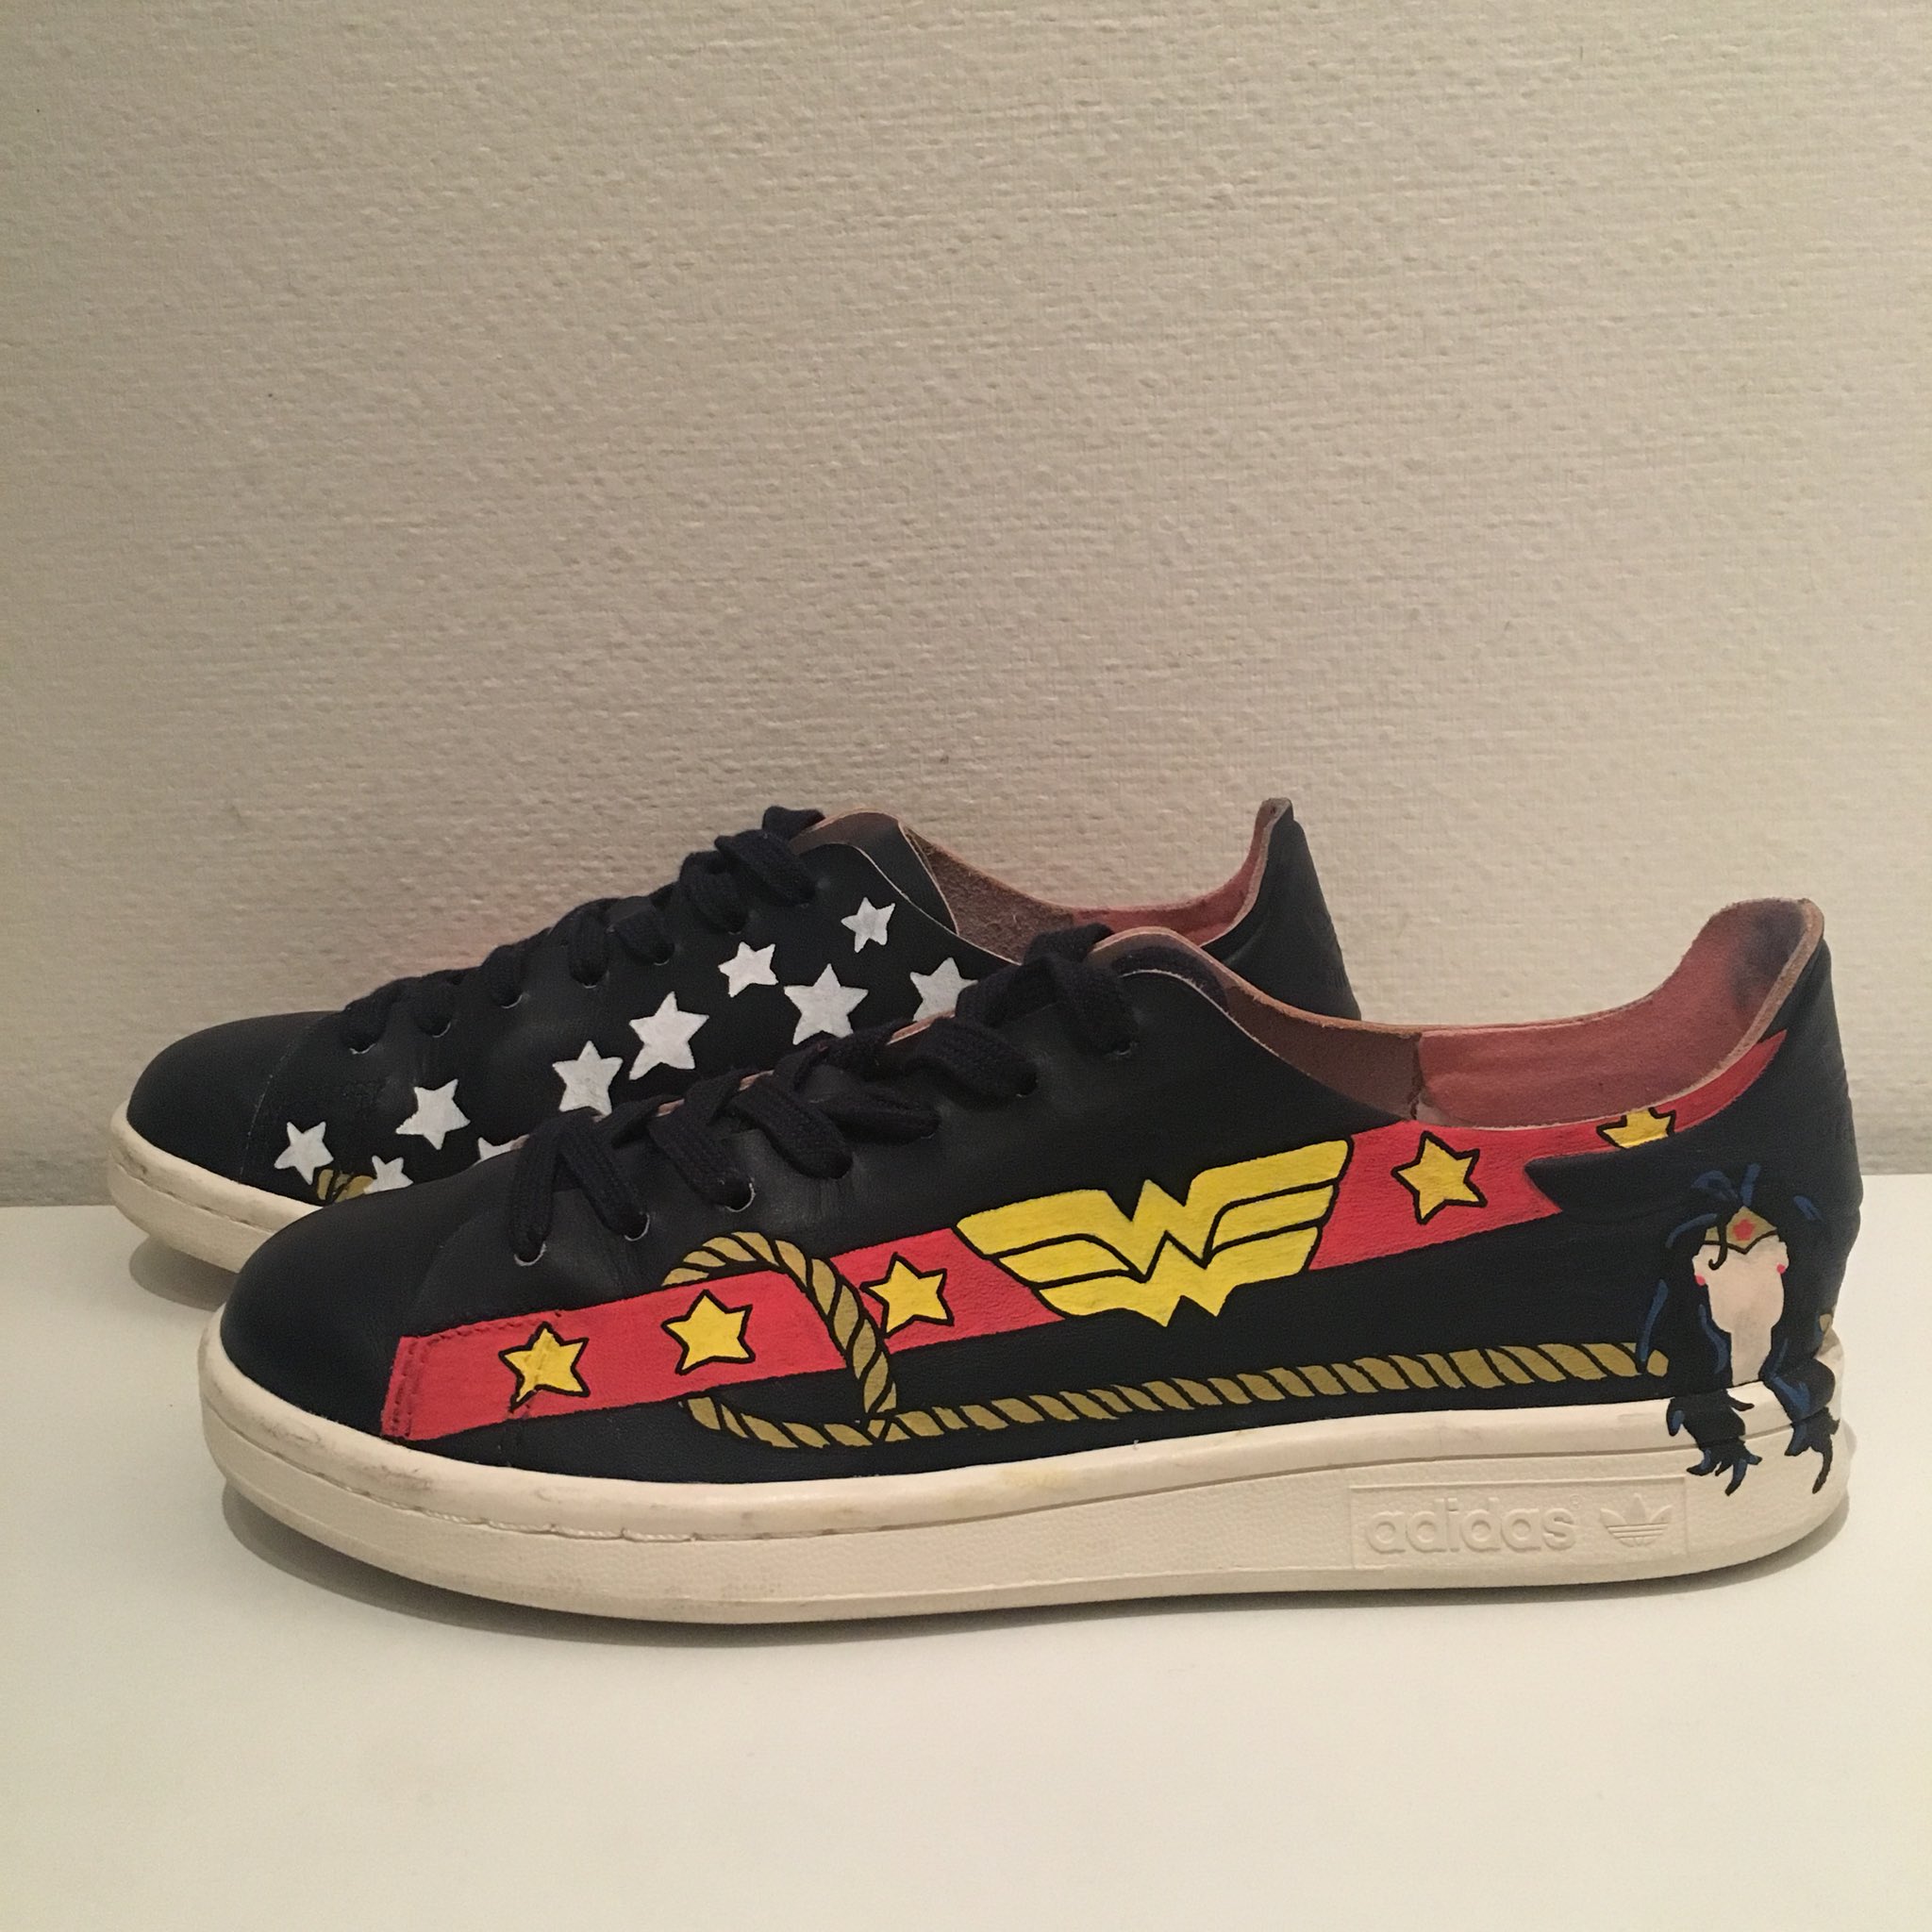 Raul Dias Twitter: "Adidas Stan Smith Wonder Woman #adidas #wonderwoman #dccomics #customized #sneakers #sneakerscustom #creation #customisation #adidascustom https://t.co/idfvC7cBGp" / Twitter